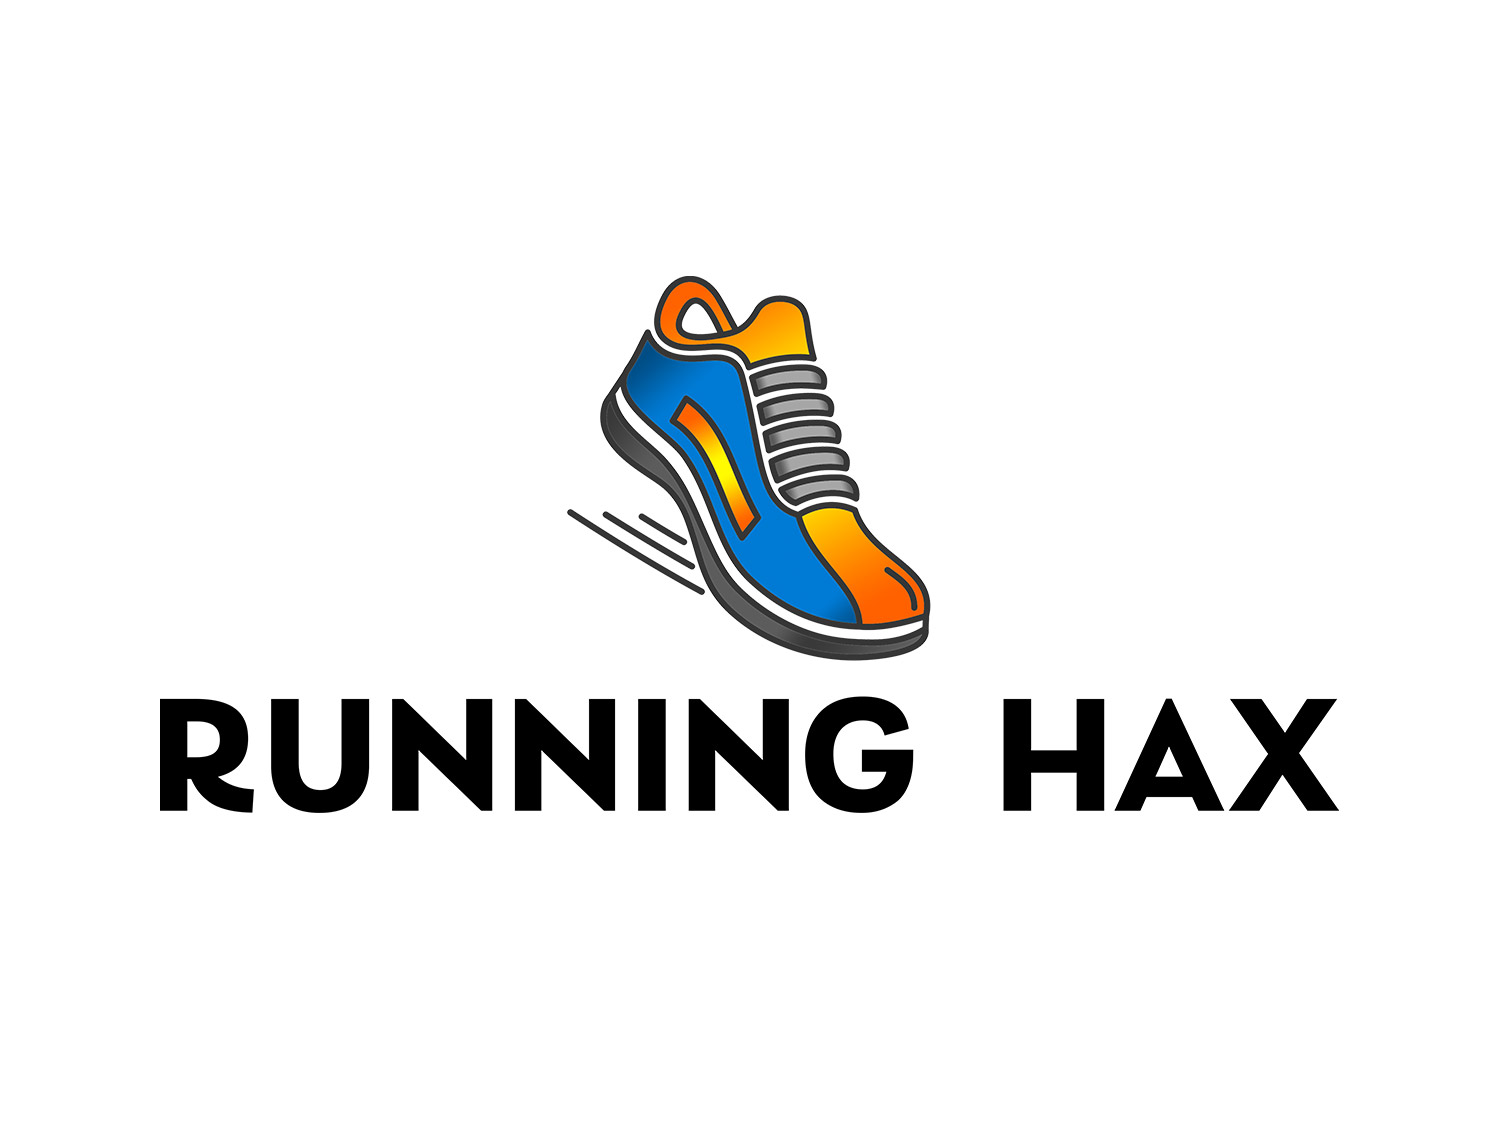 Running Hax Logo showing runninghax